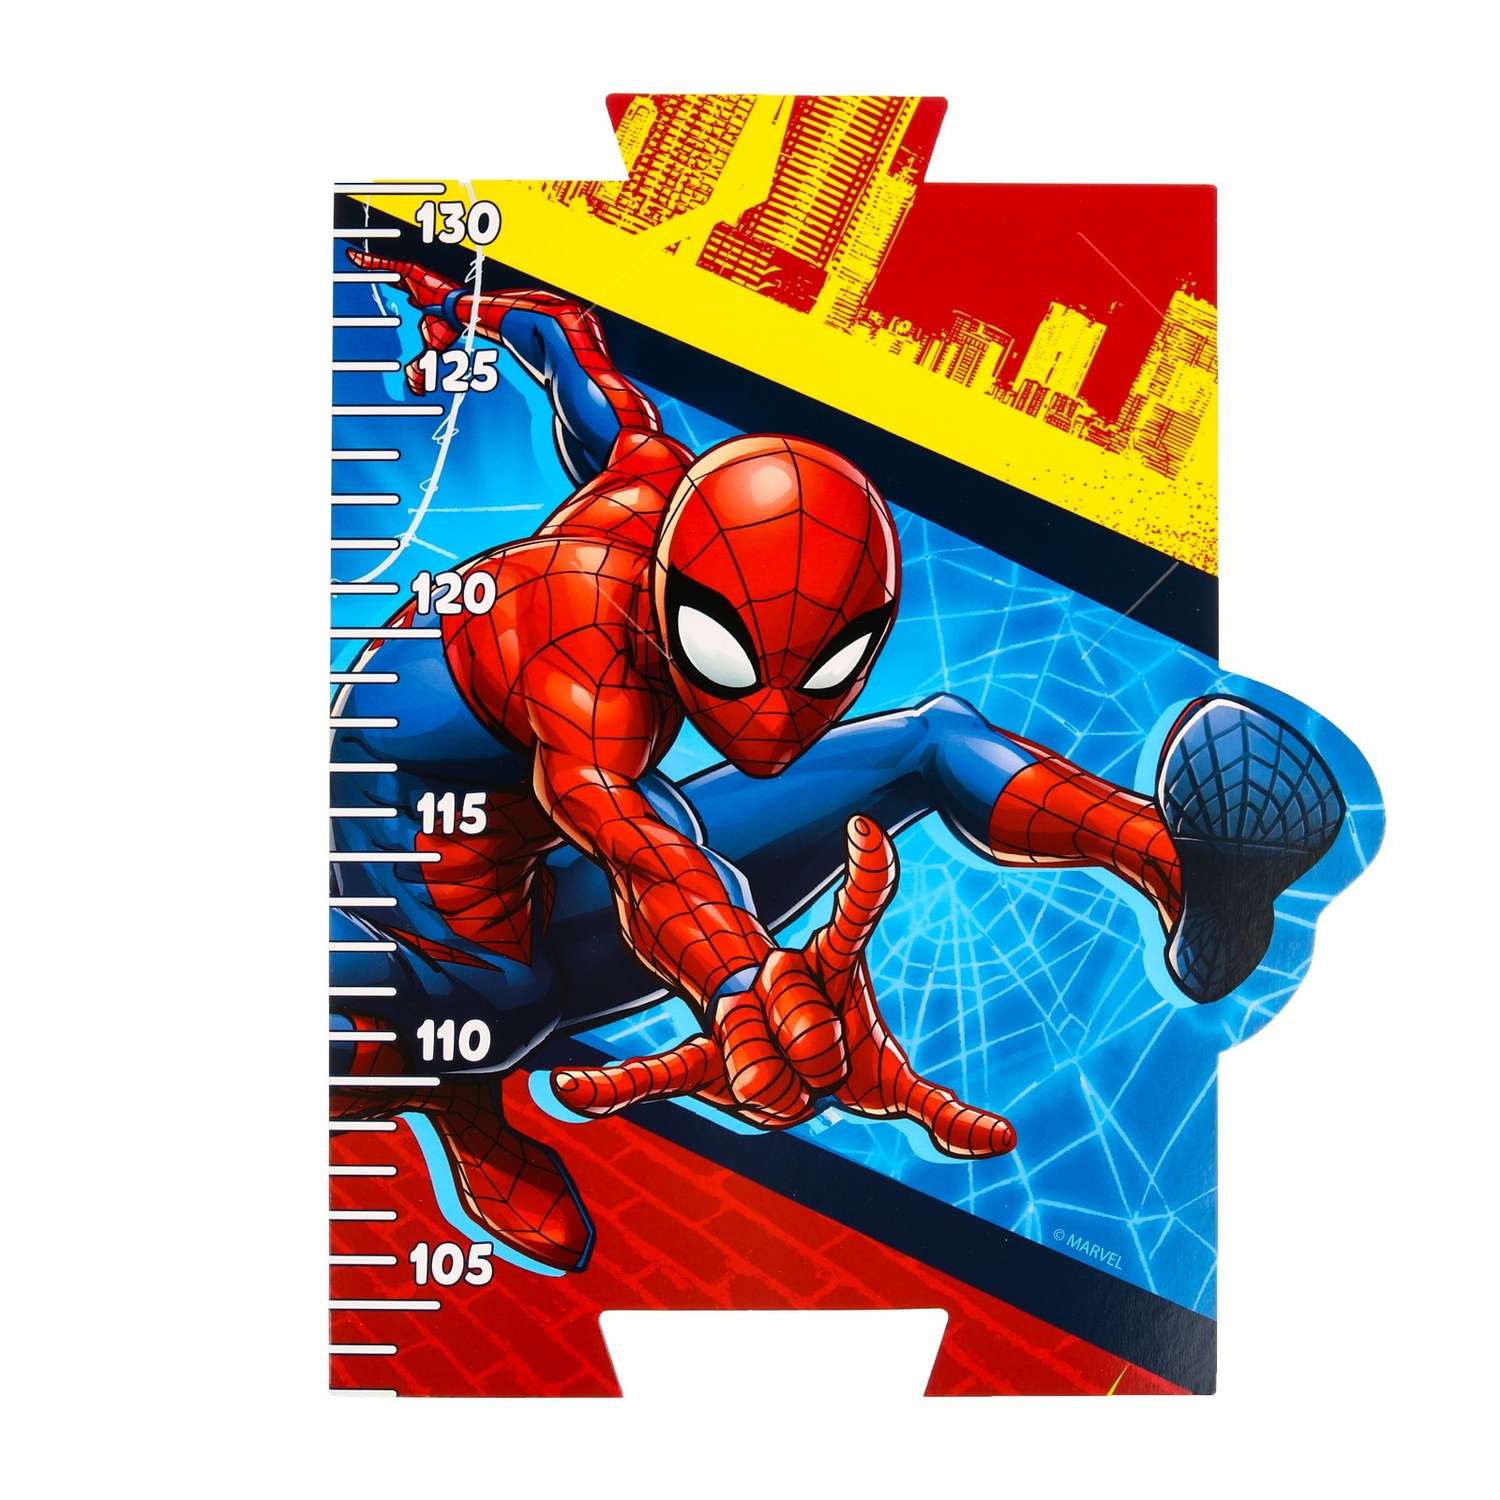 Ростомер Marvel Человек-паук - фото 4